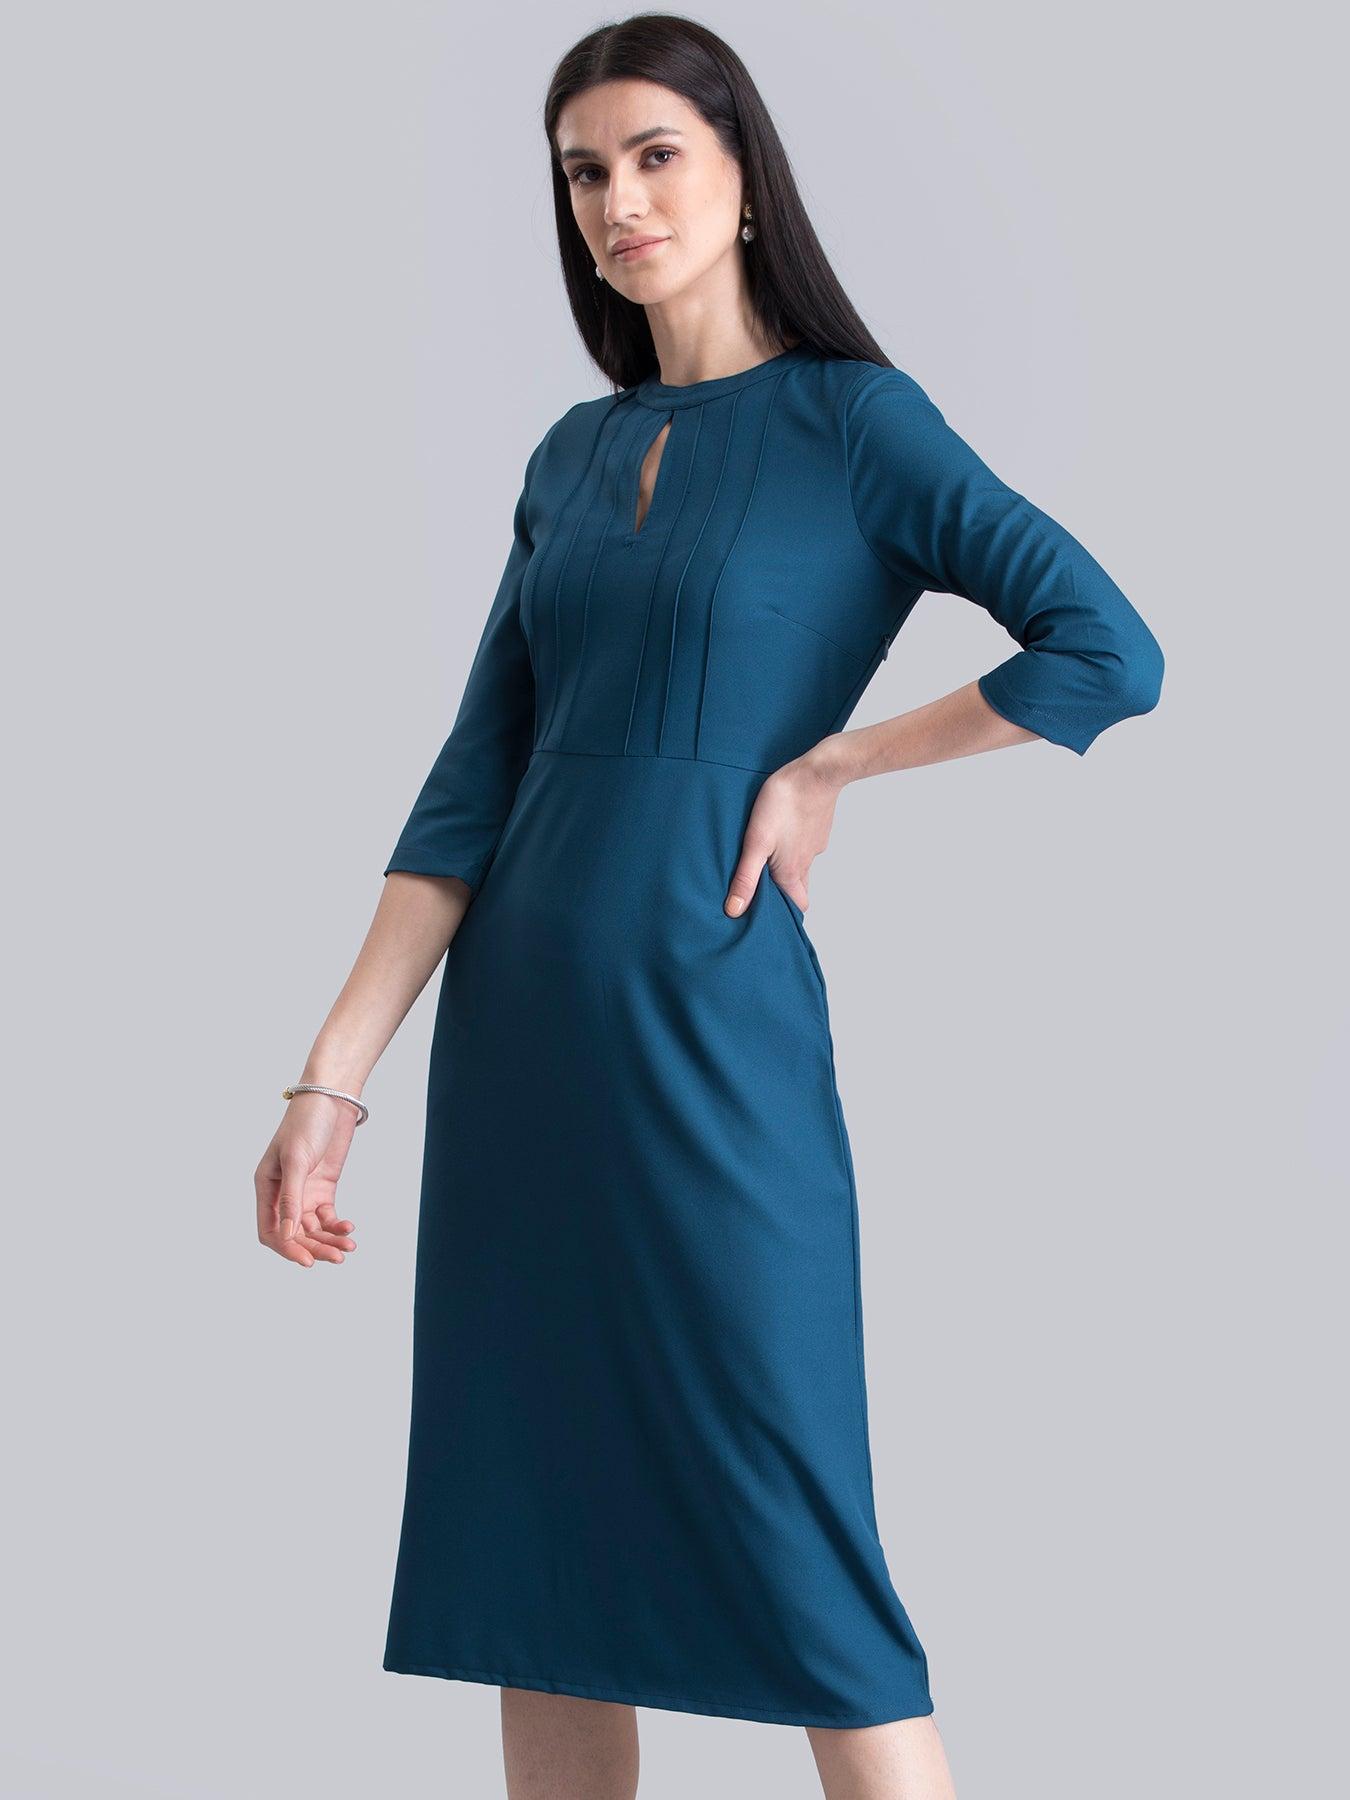 Stylised Neck Pintuck Dress - Teal| Formal Dresses